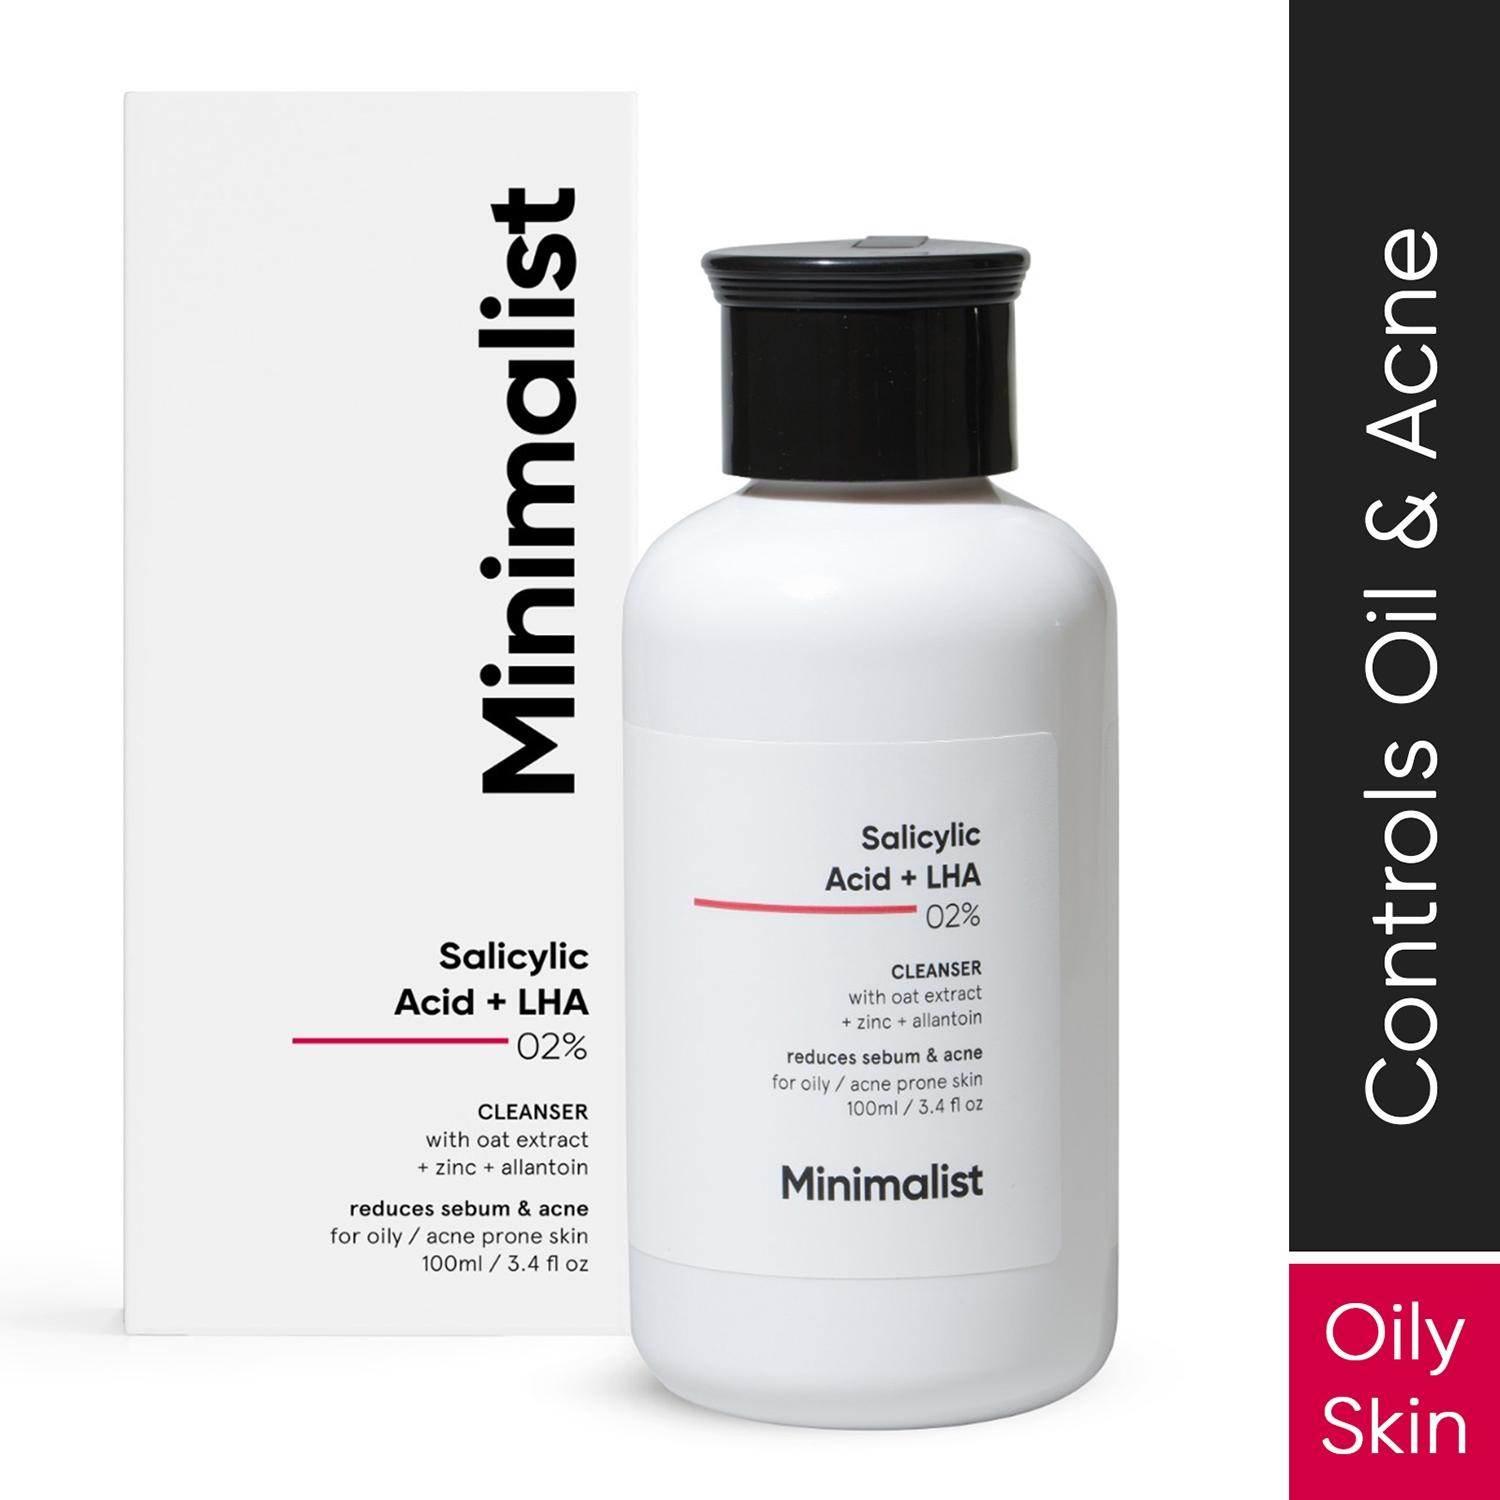 minimalist 2% salicylic acid + lha cleanser reduces sebum & acne (100ml)